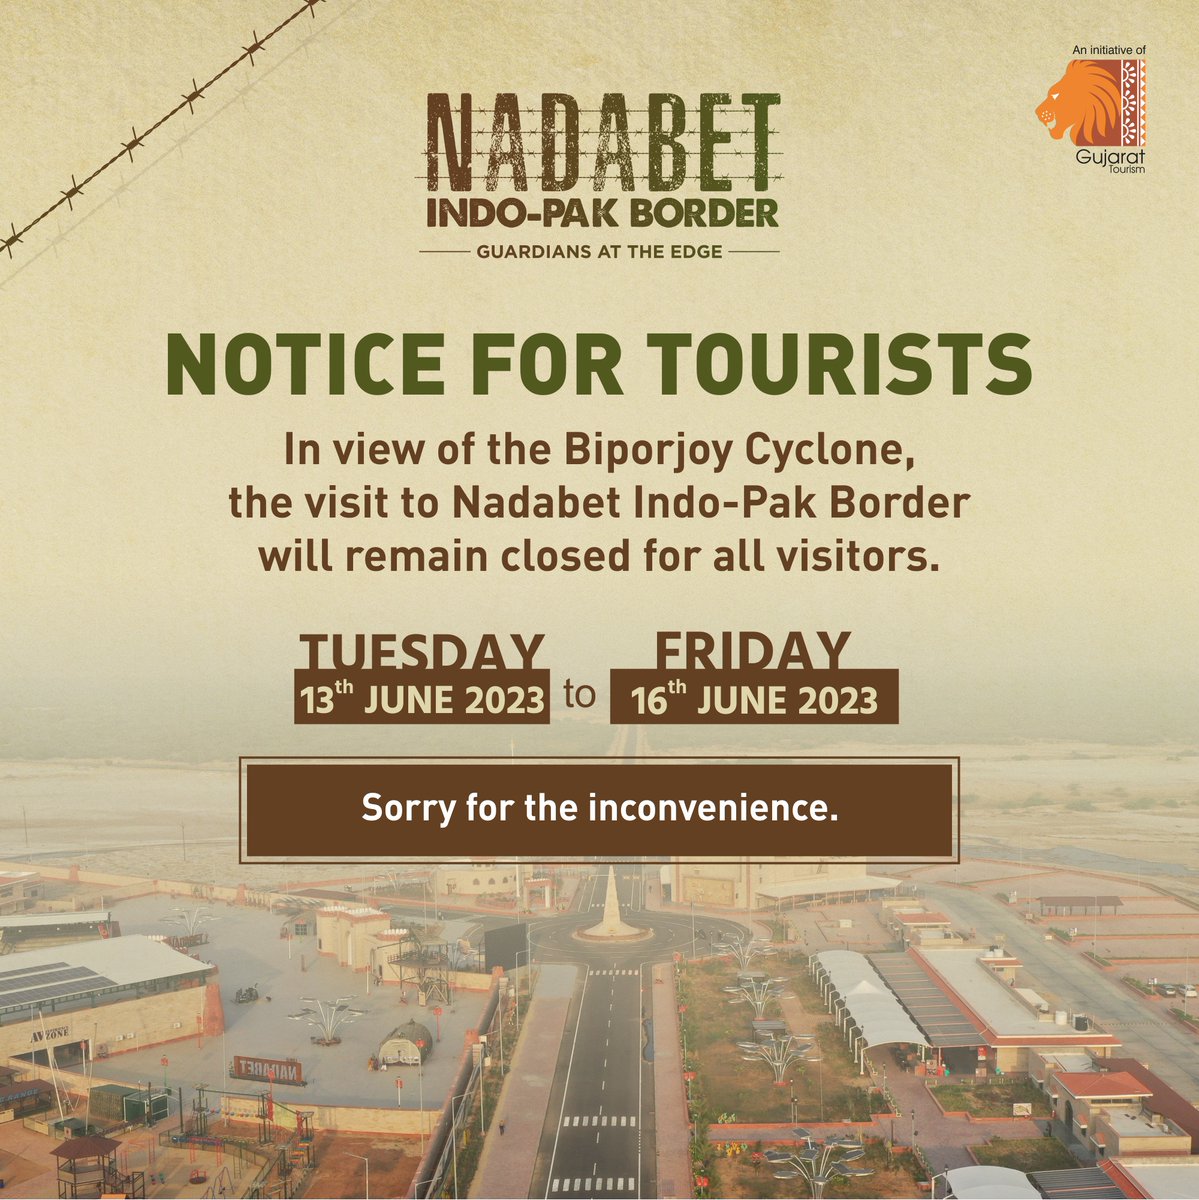 Important Notice for tourists that Nadabet Indo-Pak Border will remain closed till June 16 under the forecast of the Biporjoy cyclone.

#visitnadabet #IndoPakBorder #NadabetBorder
#palanpur #suigam #banaskantha #Gujarat #gujarattourism #exploregujarat #incredibleindia